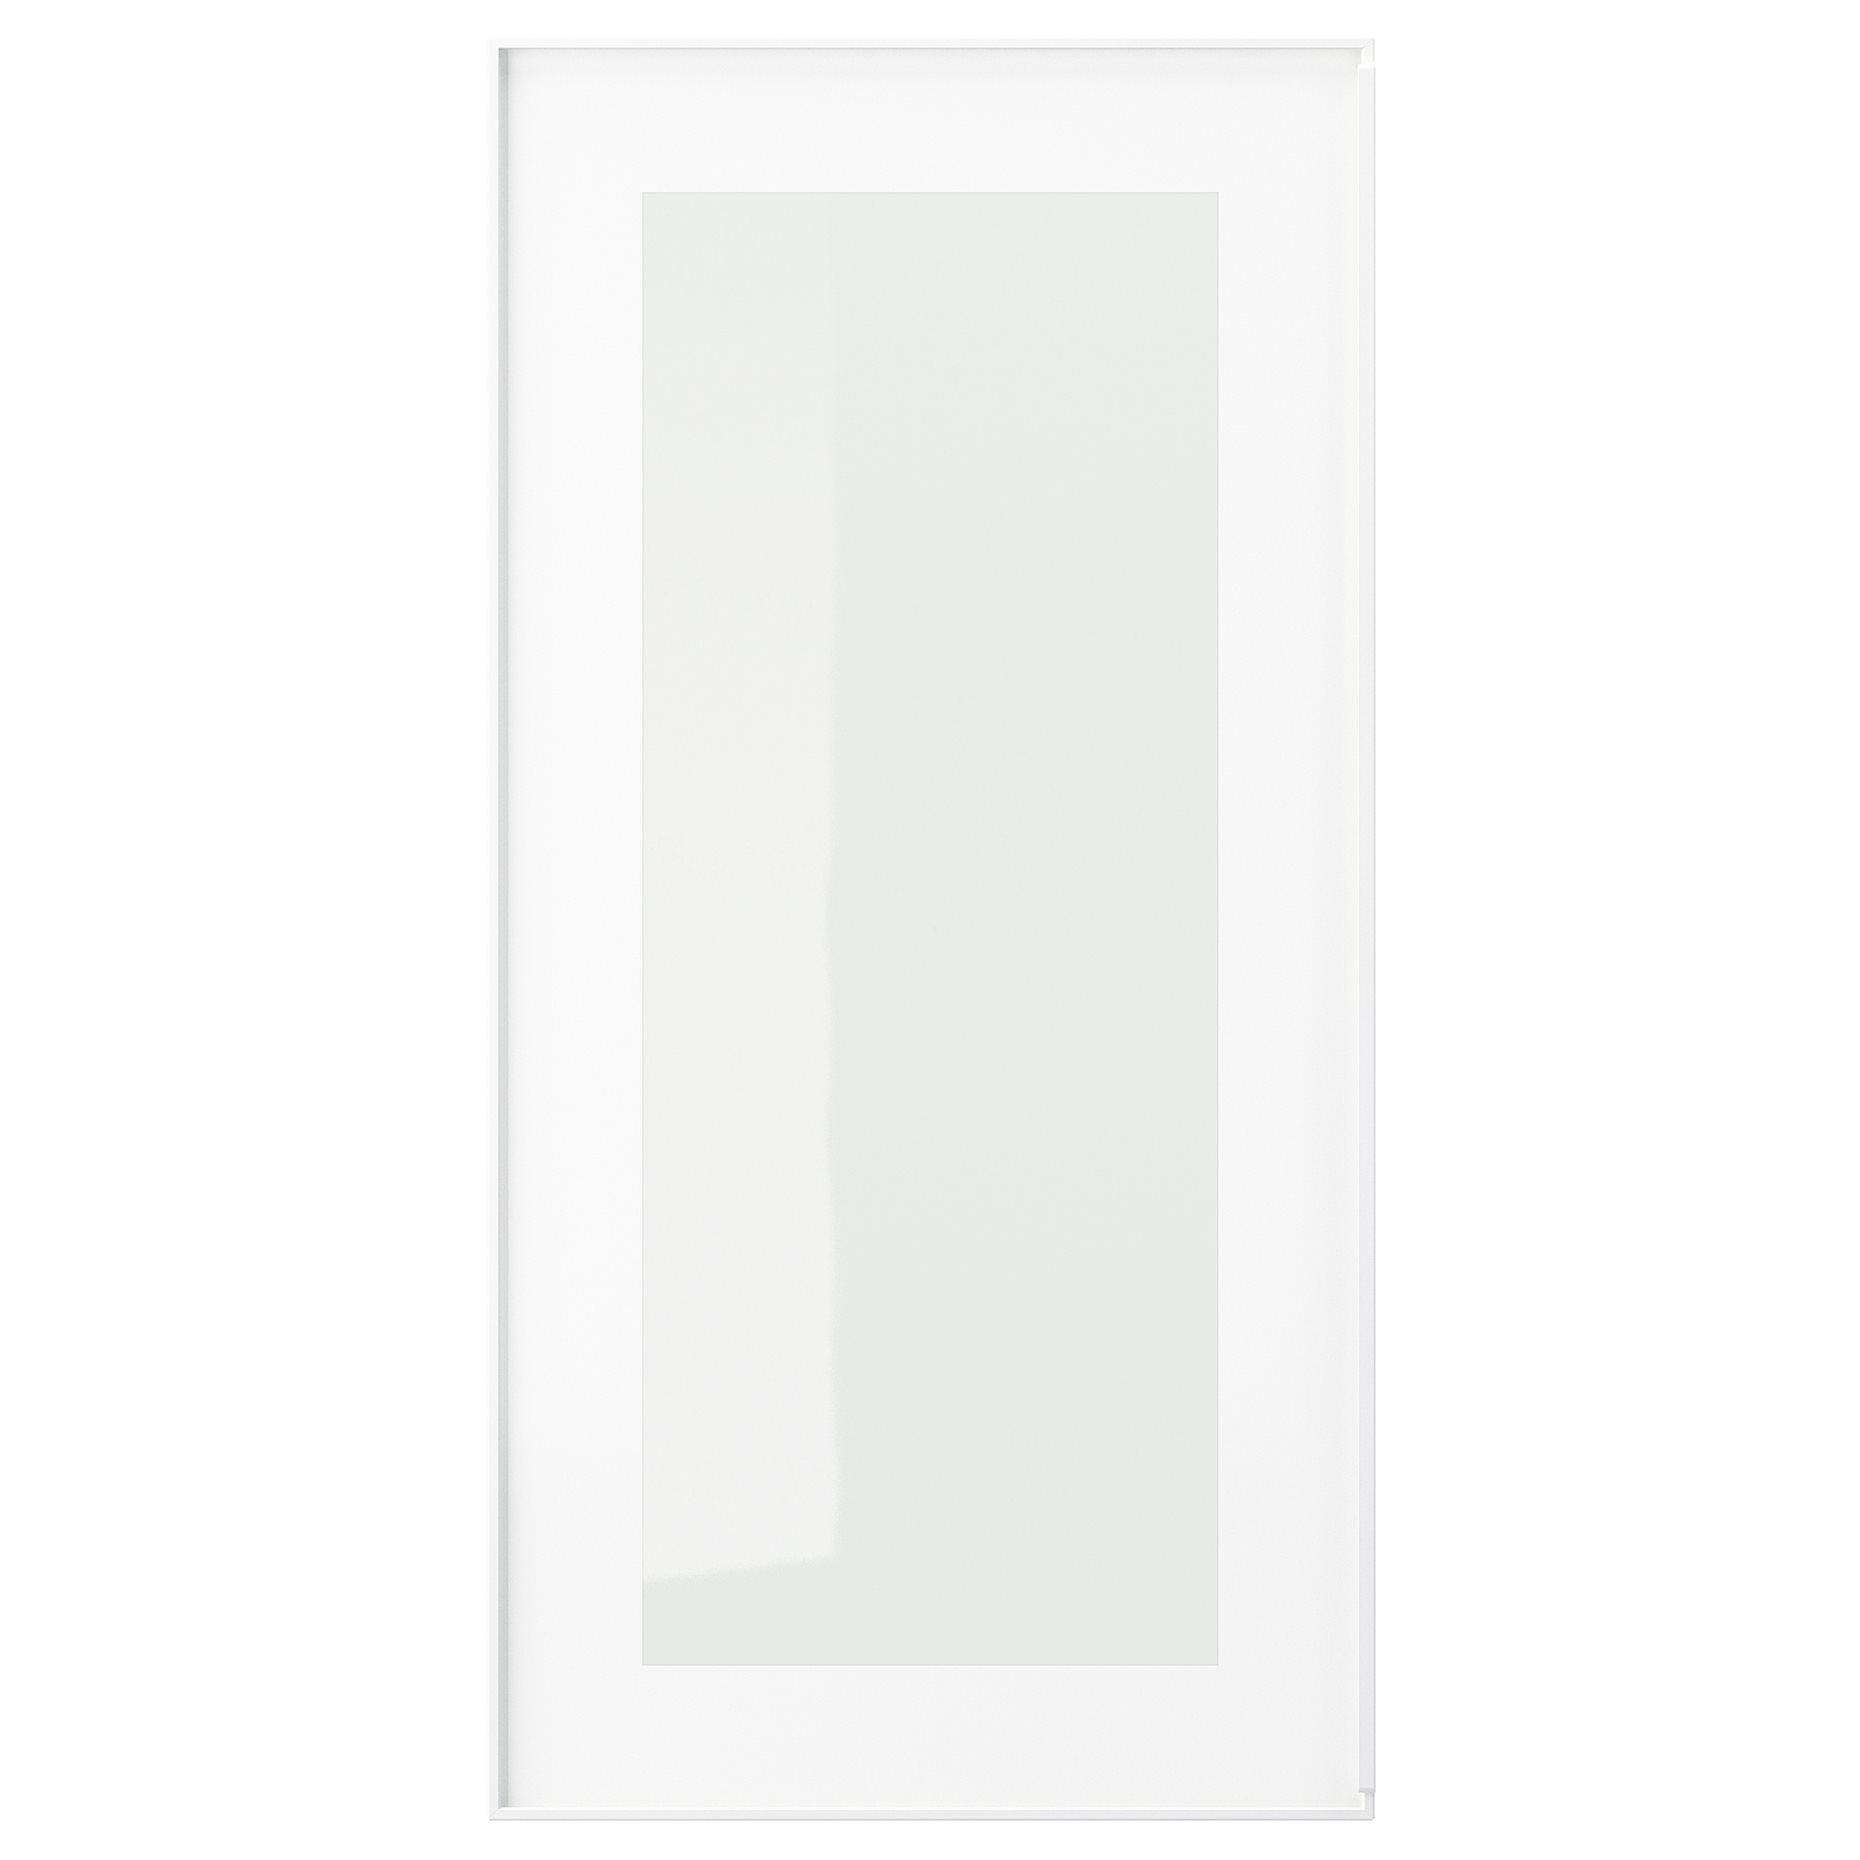 HEJSTA, γυάλινη πόρτα, 30x60 cm, 705.266.31